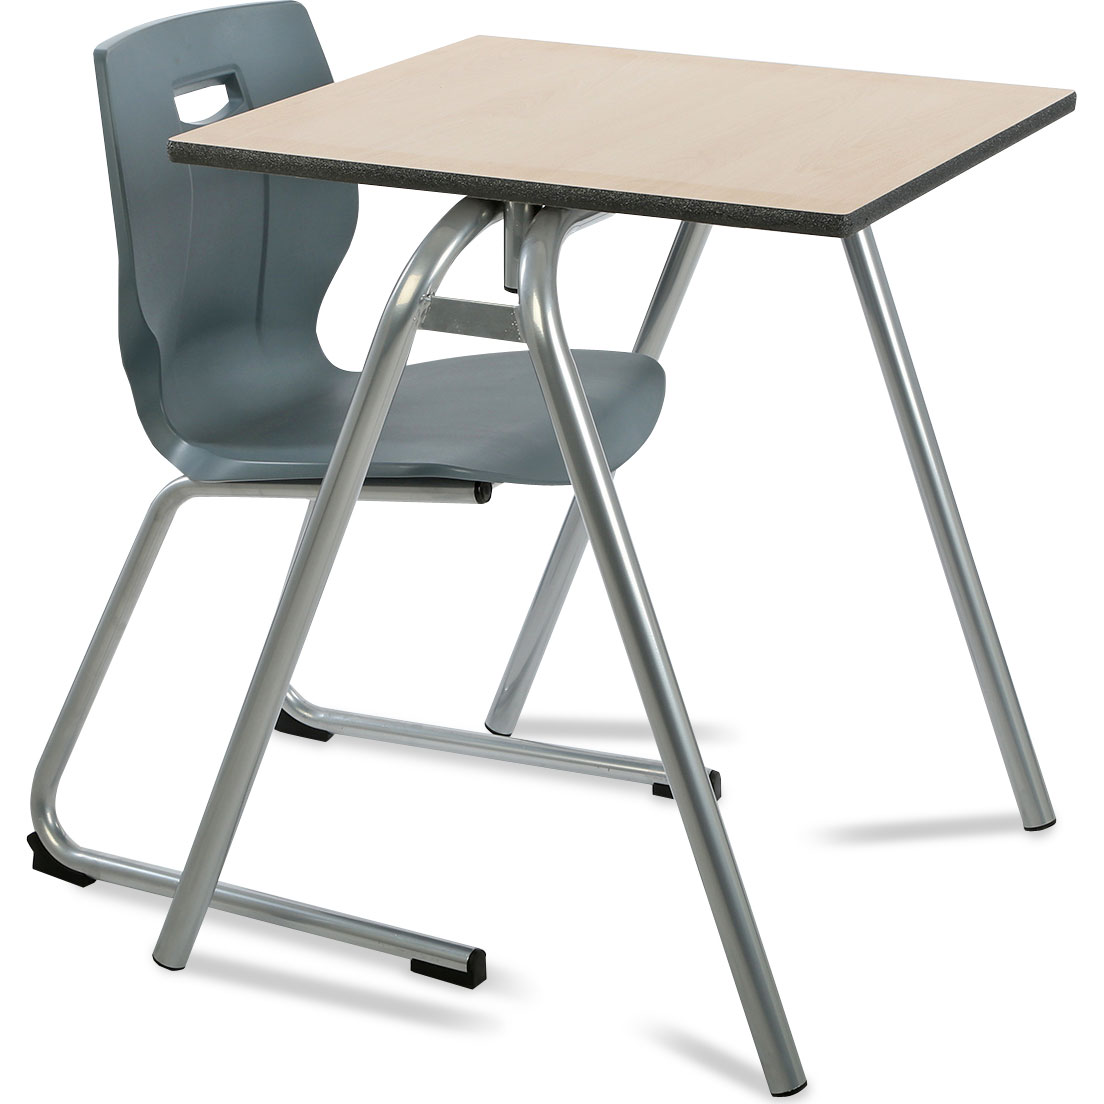 Square School Classroom Tables